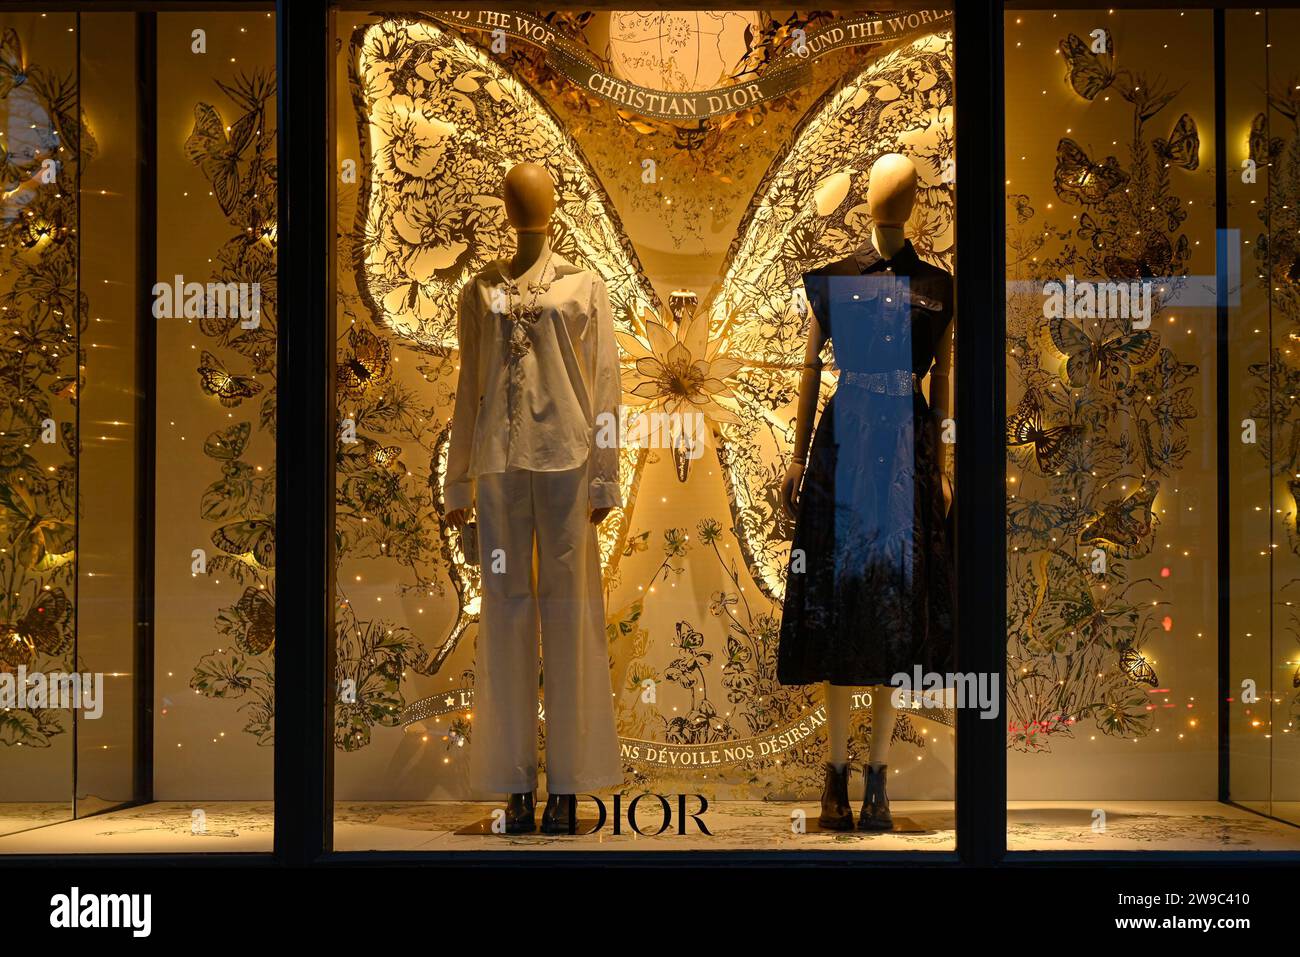 Christian Dior boutique, window display, Vancouver, British Columbia, Canada Stock Photo